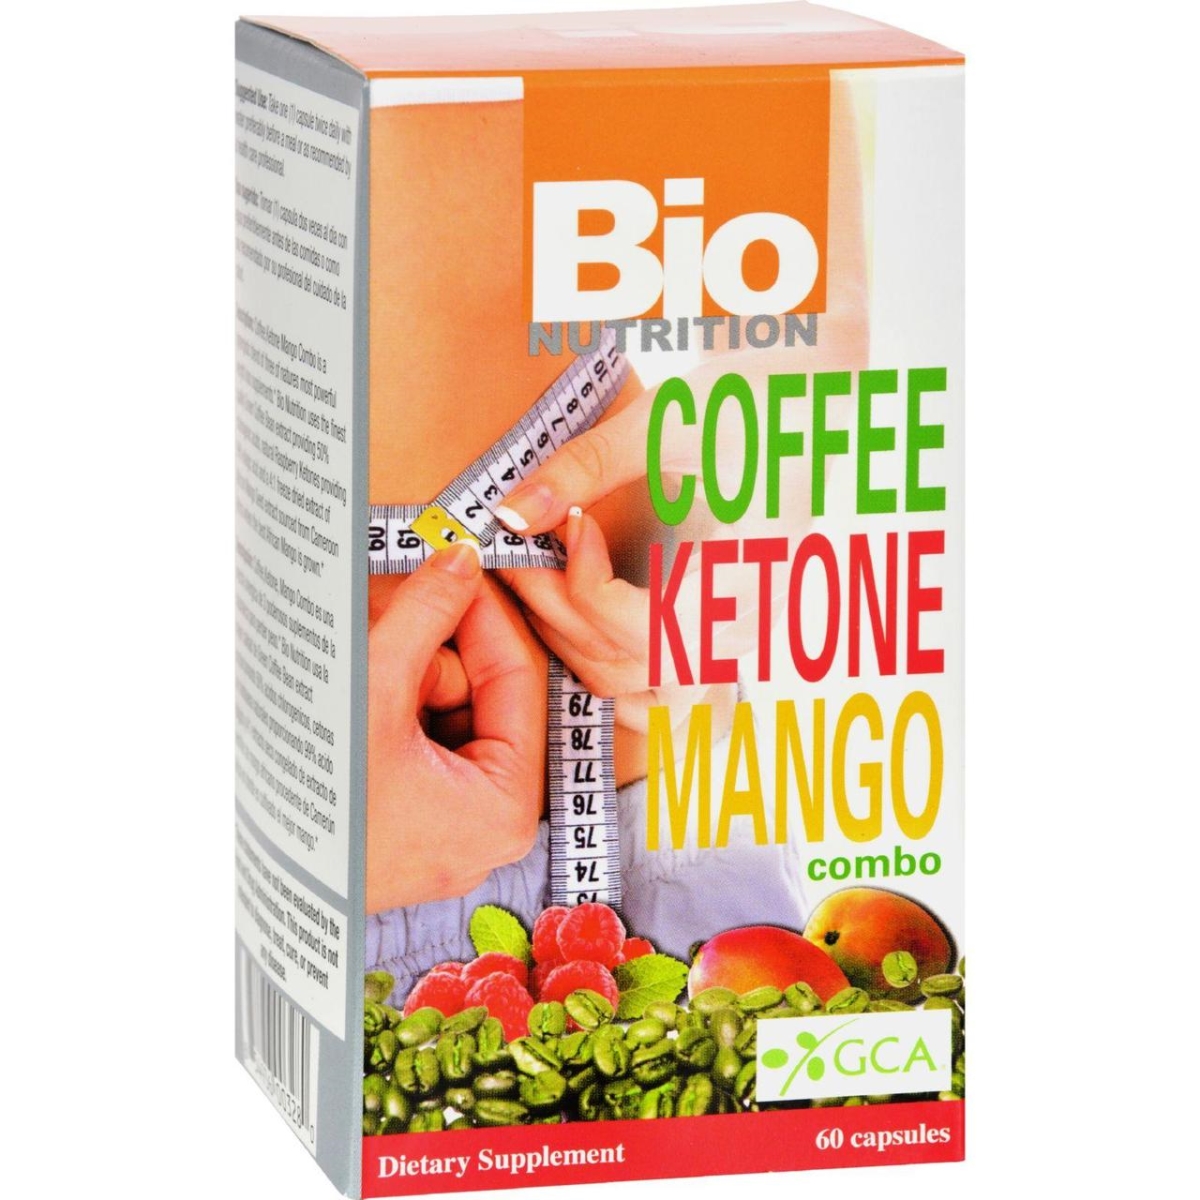 Bio Nutrition Hg1237296 Coffee Keytone Mango Combo - 60 Count